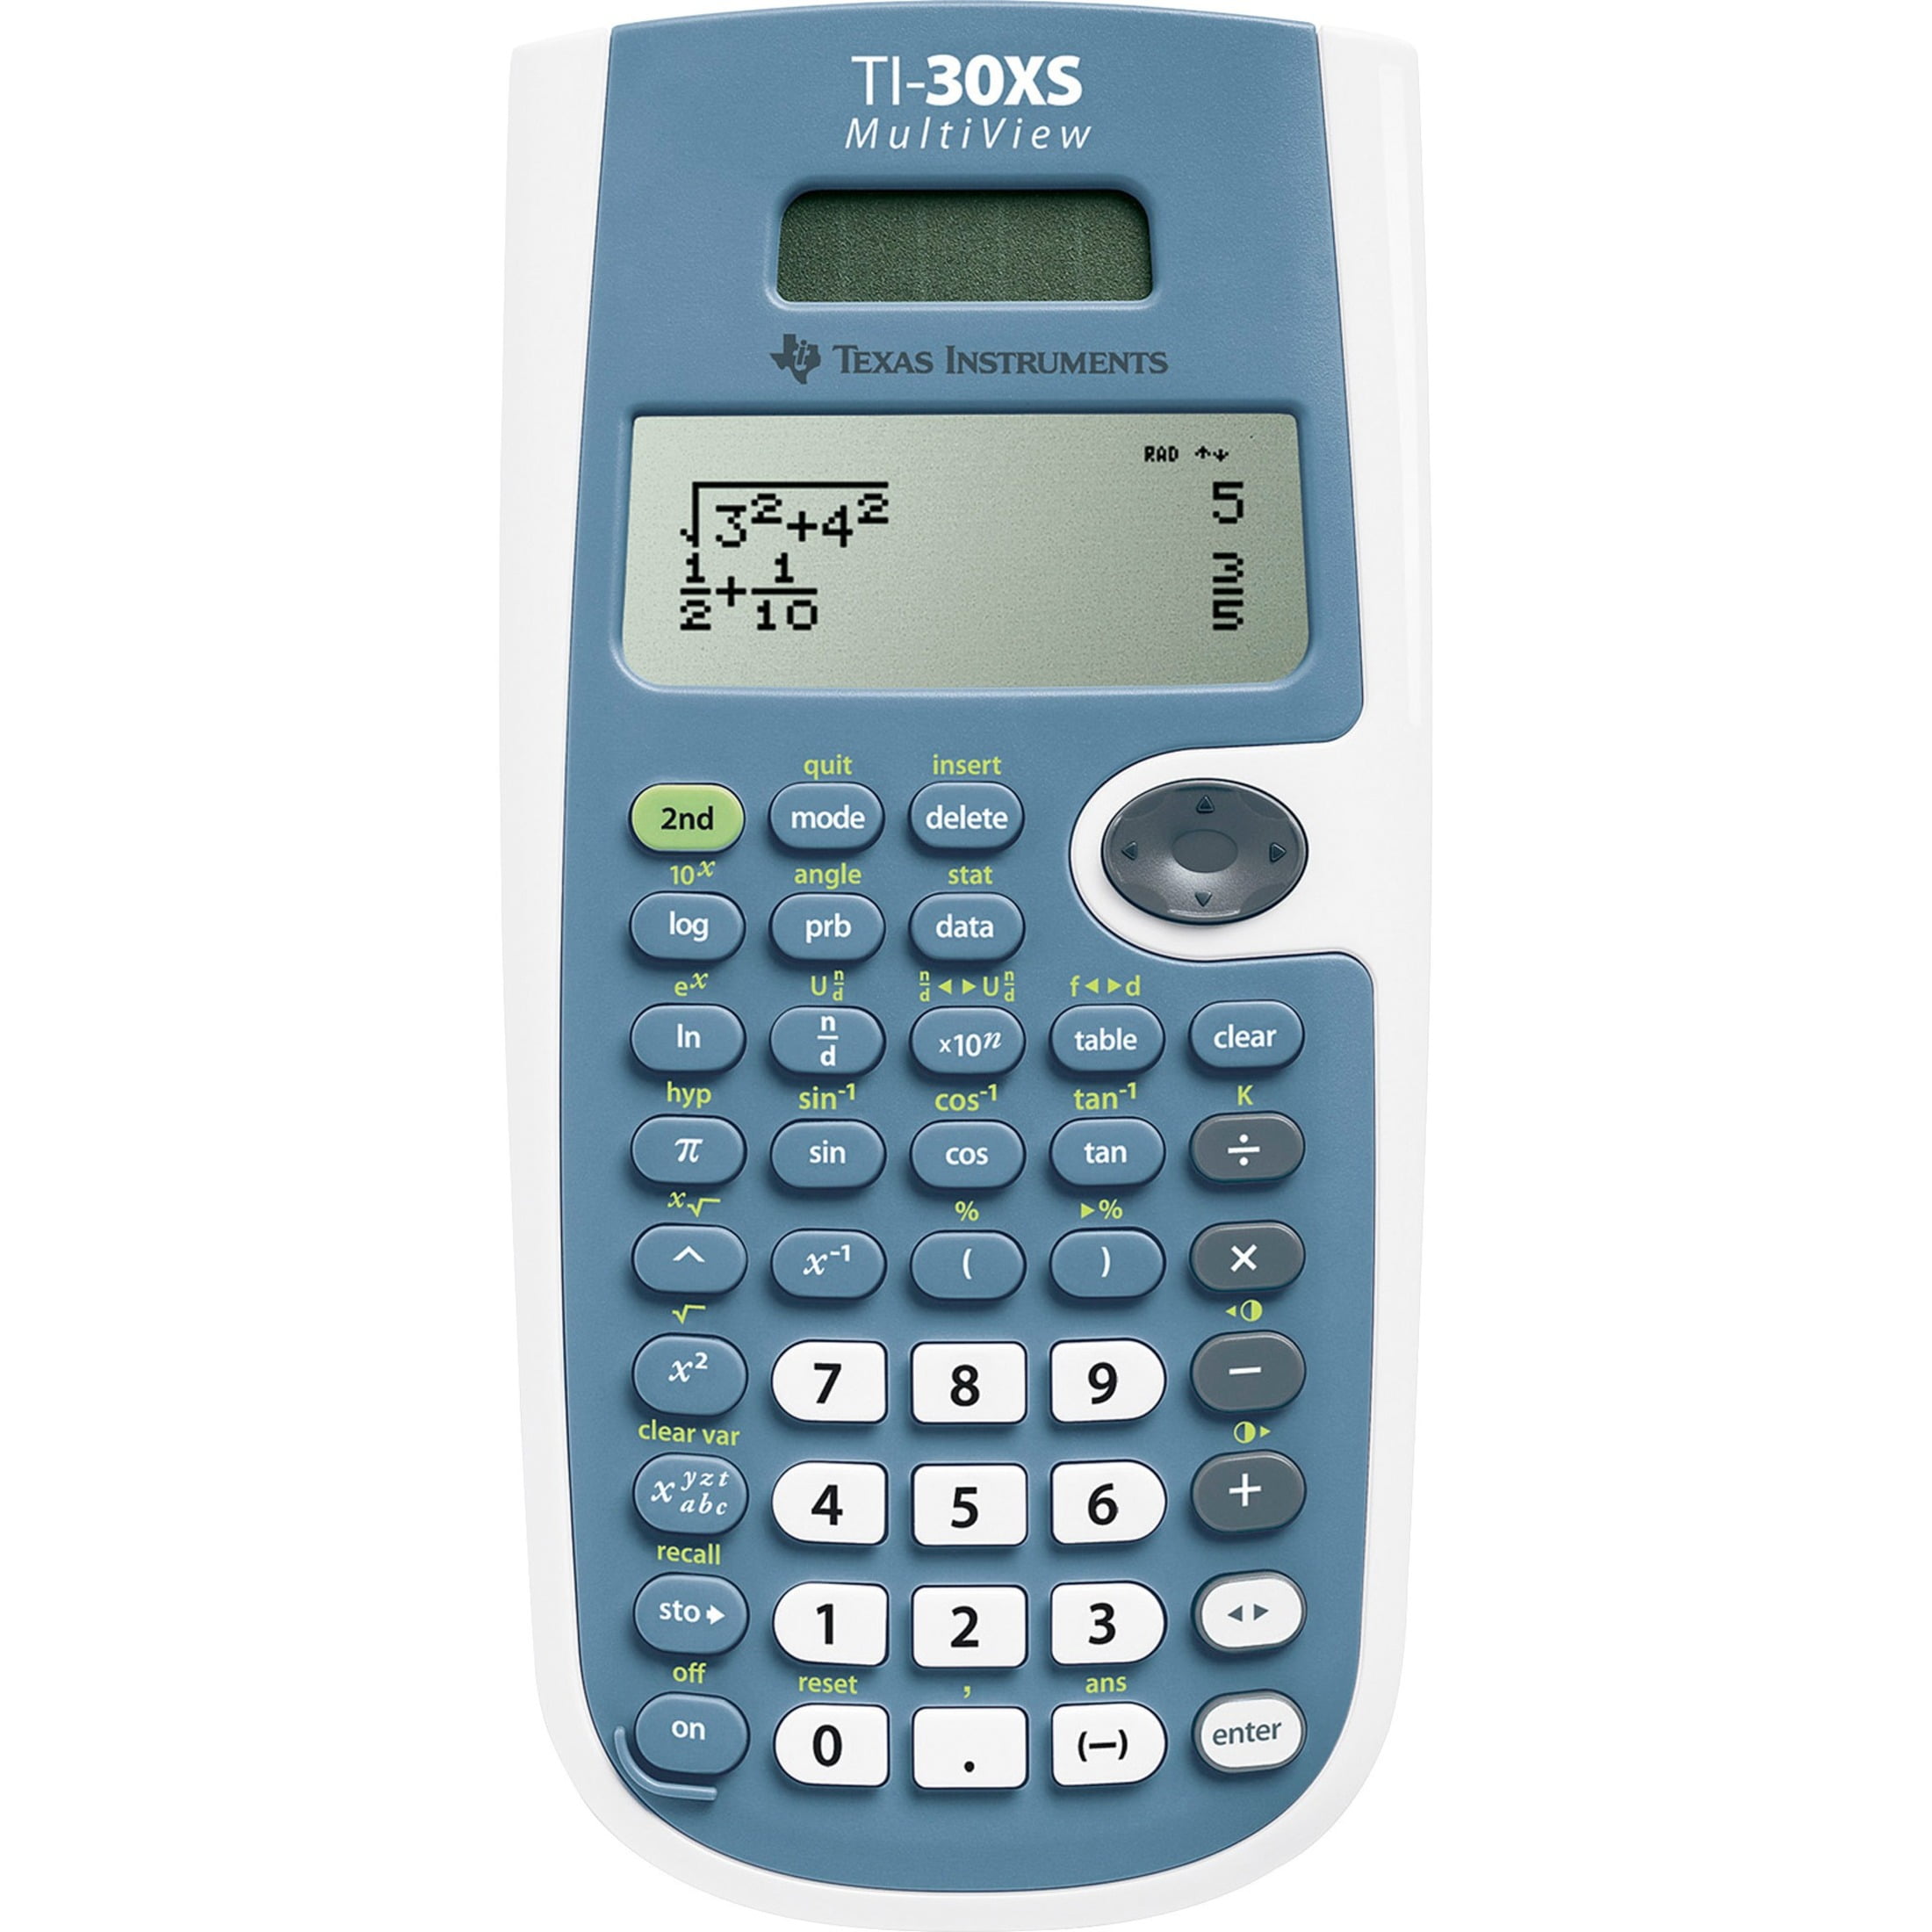 Texas Instruments Ti-36x Pro Scientific Calculator 16-digit LCD TI36XPRO for sale online 